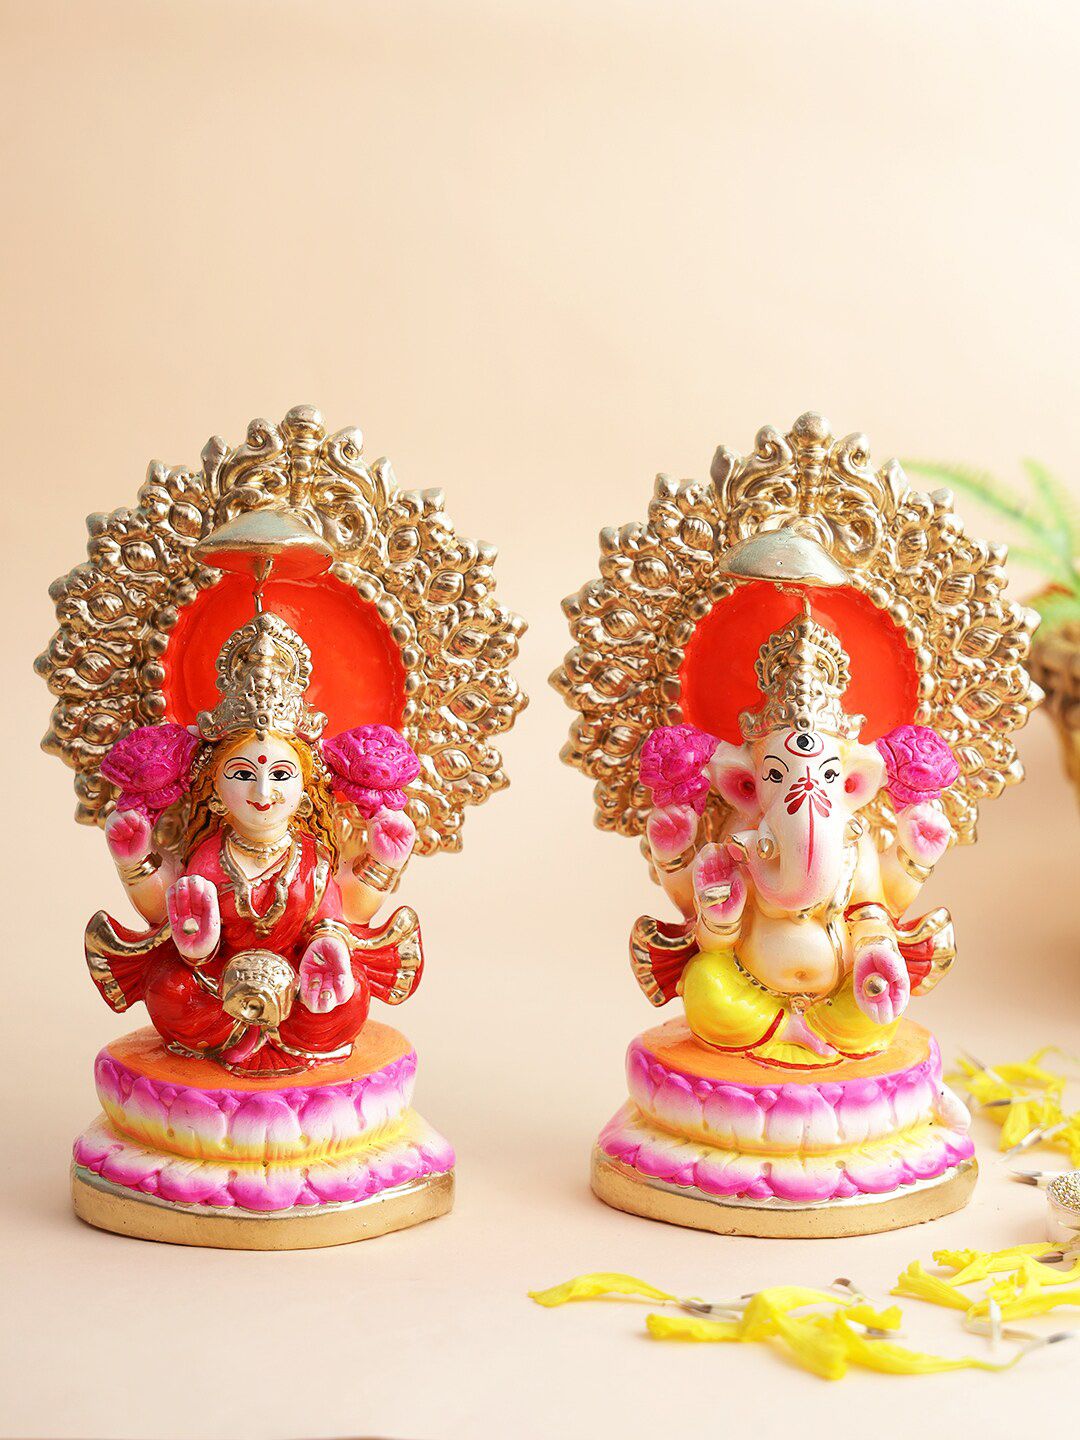 Aapno Rajasthan Gold-Colored Pink Handpainted Laxmi Ganesh Idol Set Price in India